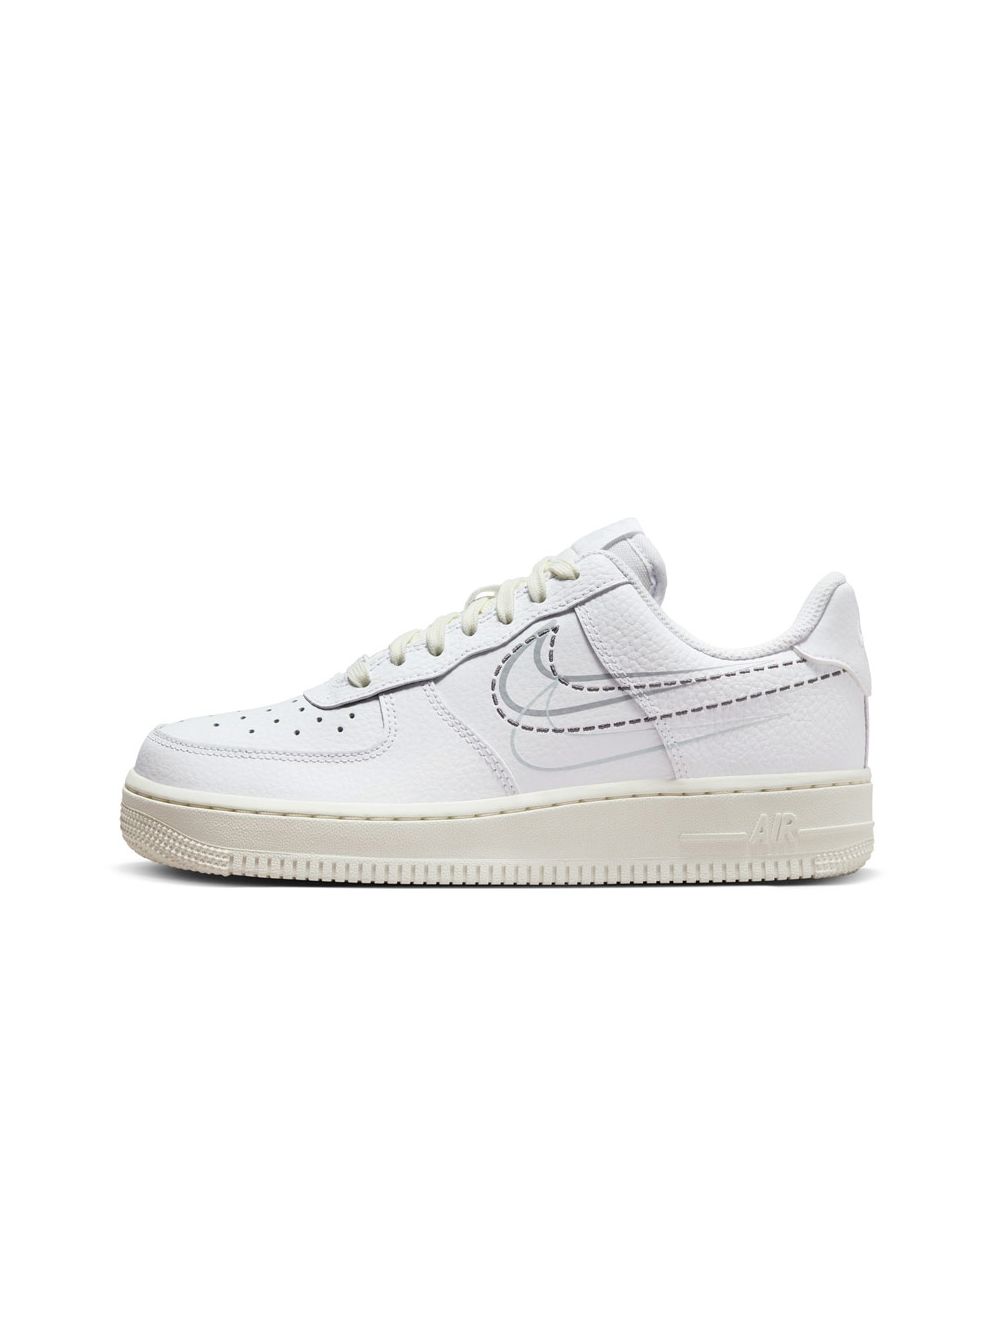 Shop Nike Air Force 1 07 Womens Shoes White | Studio 88